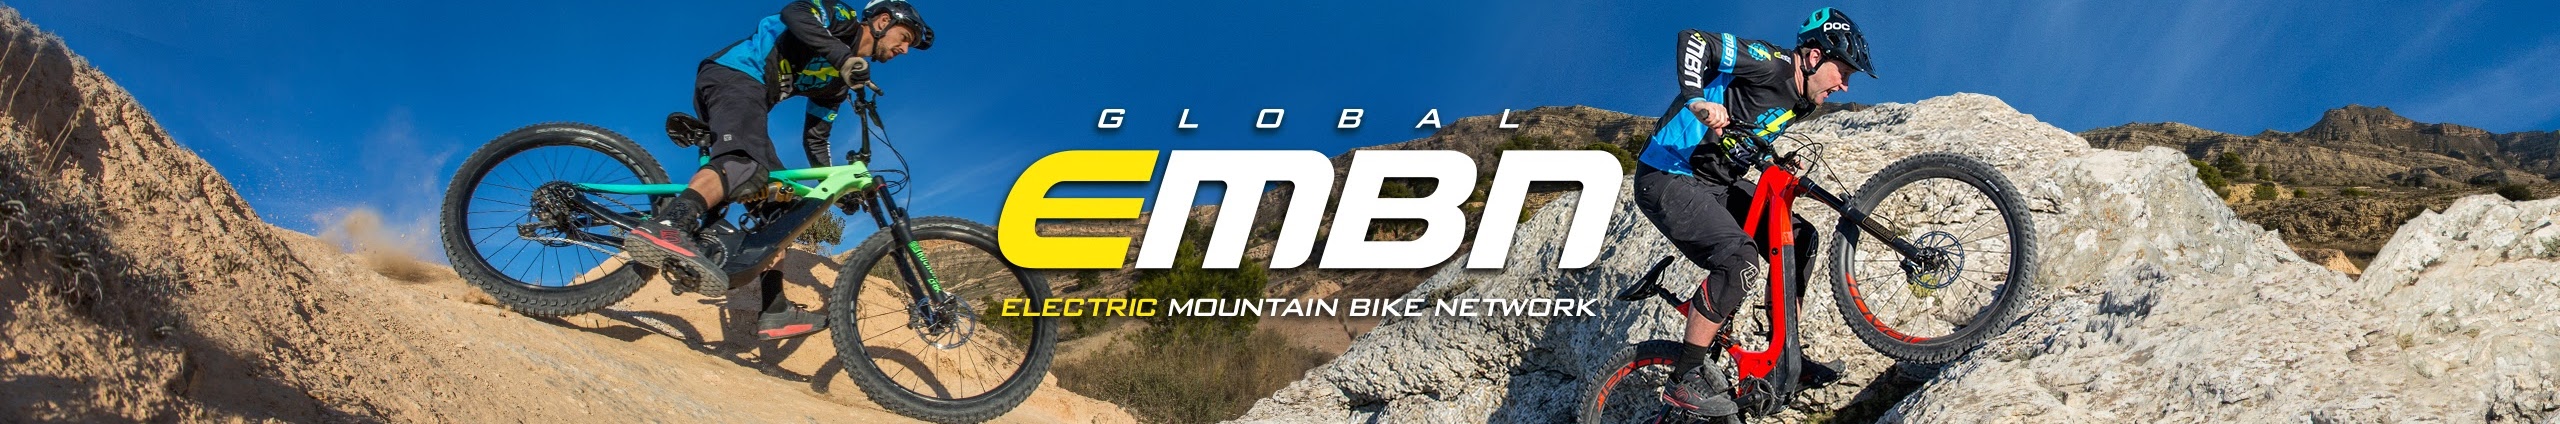 electric mountain bike network